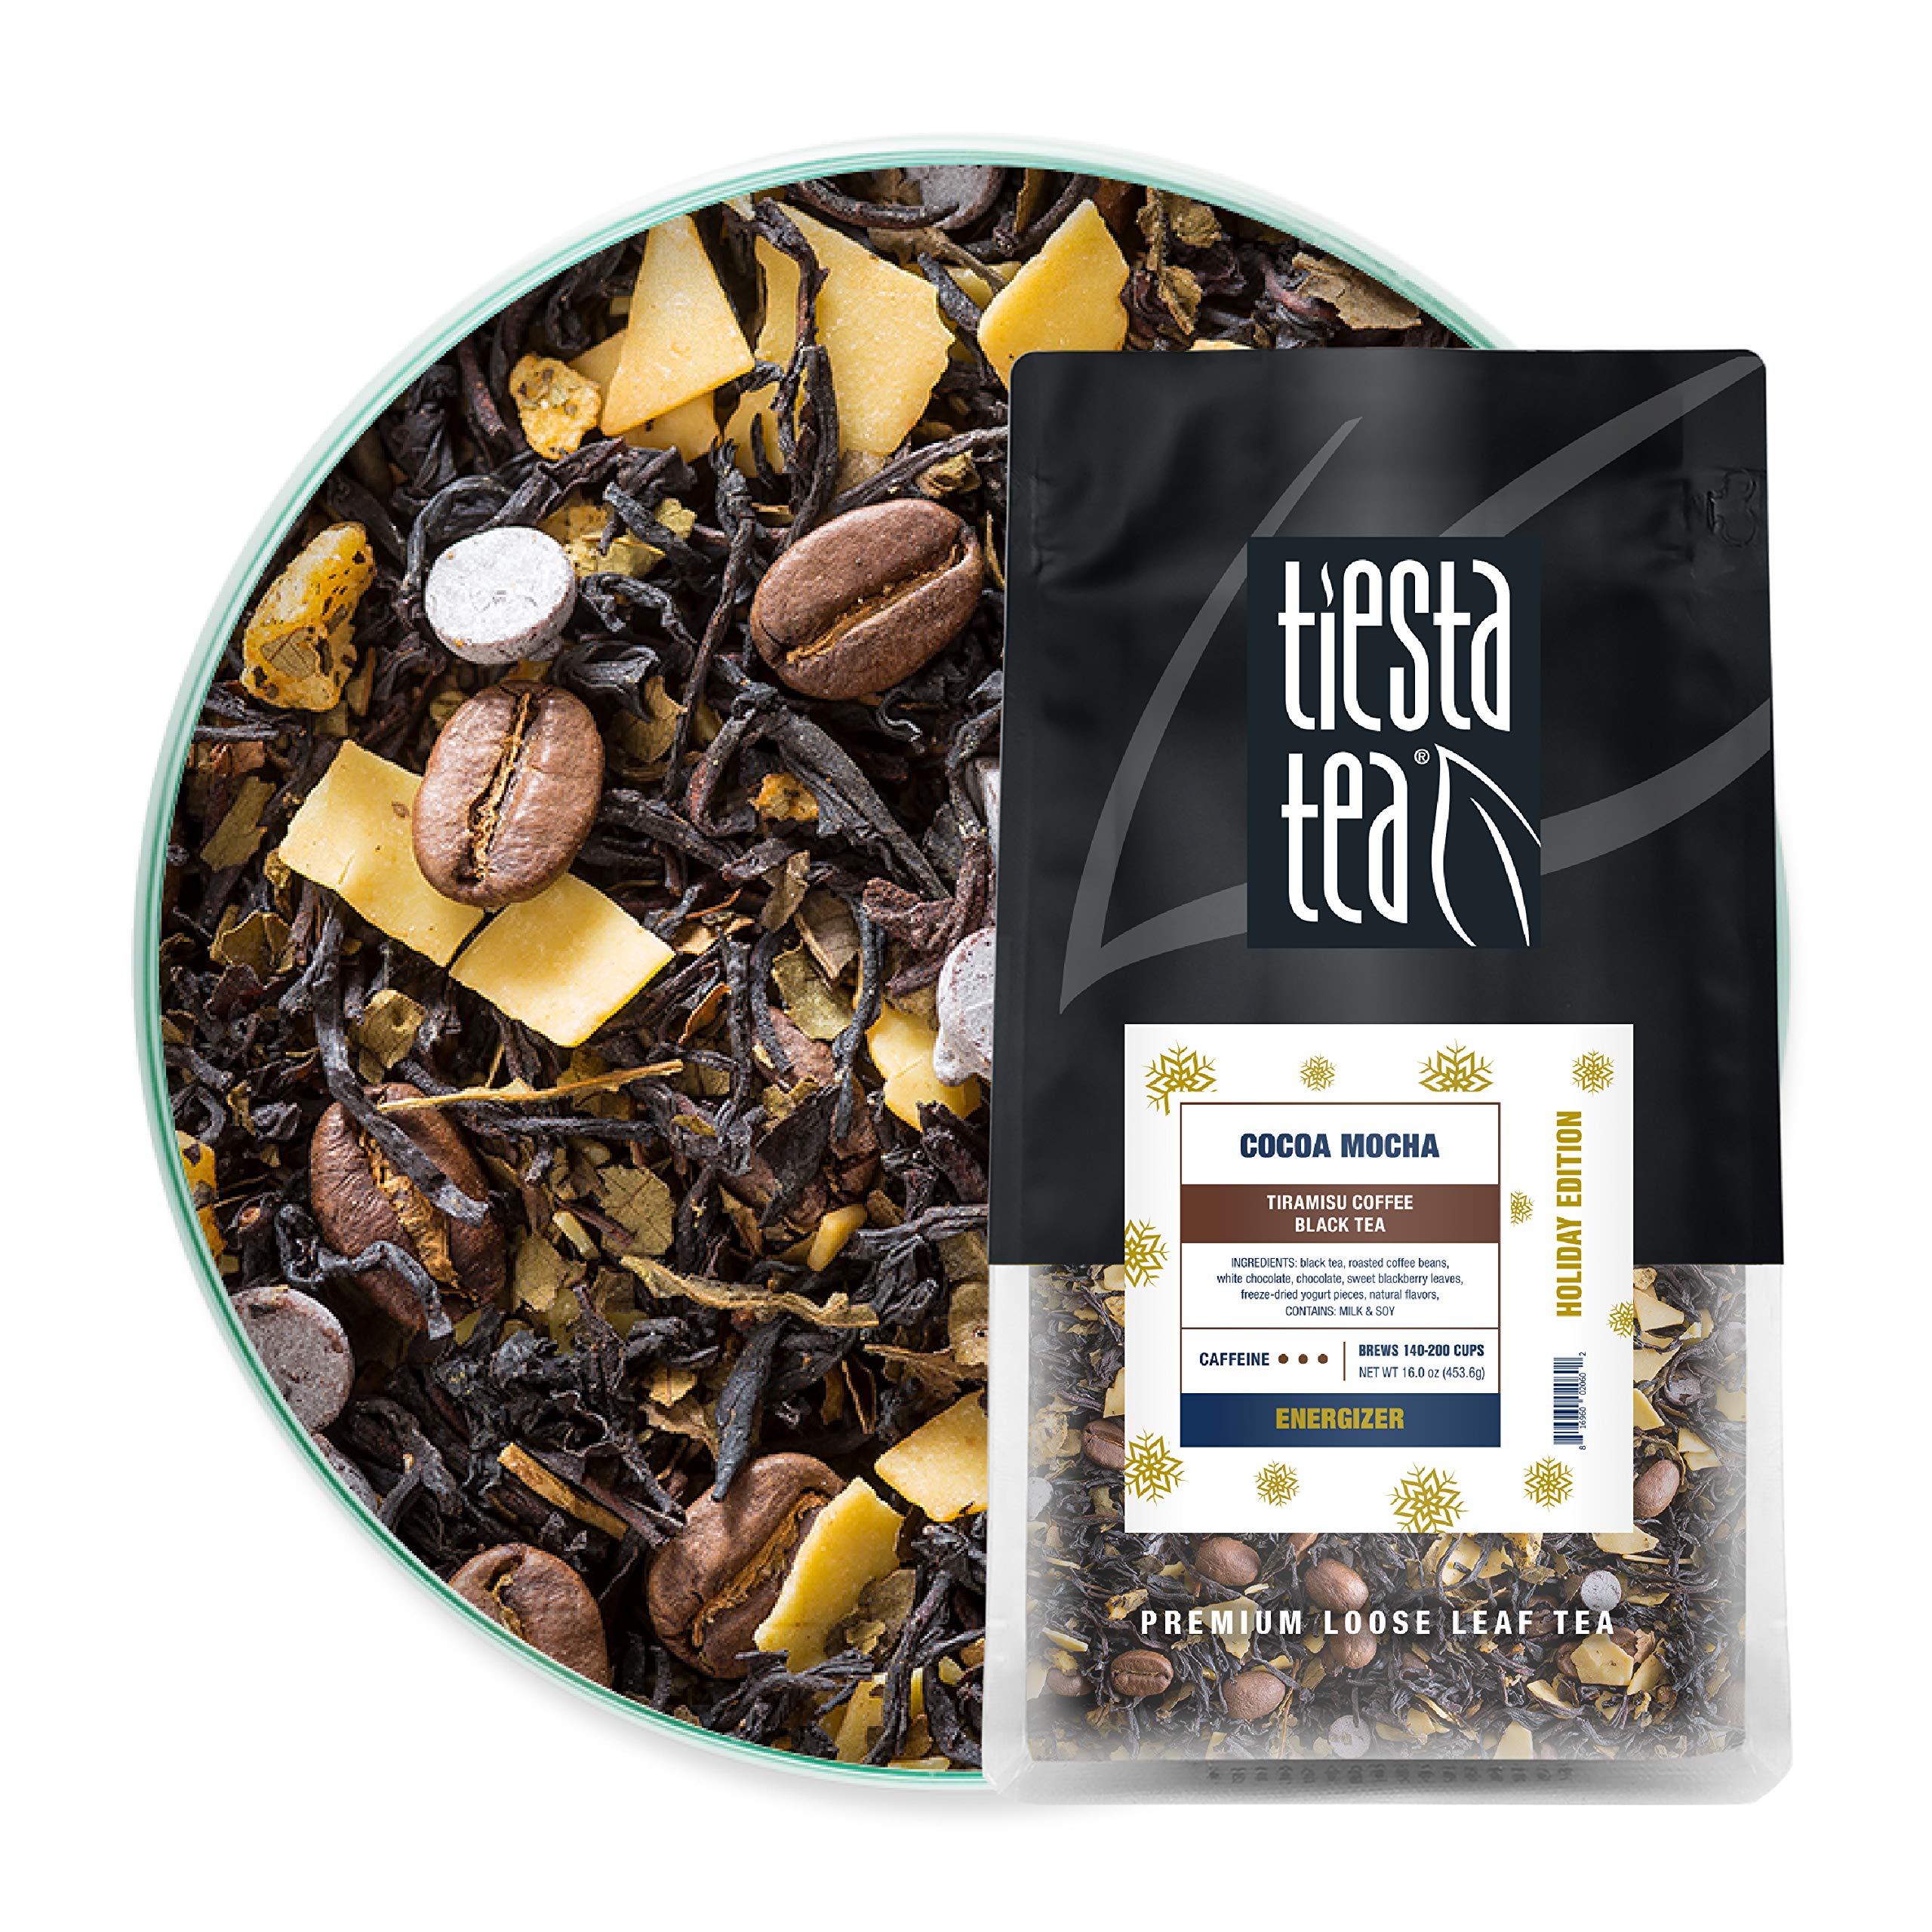 Tiesta Tea - Cocoa Mocha, Loose Leaf Tiramisu Coffee Black Tea, High Caffeine, Hot & Iced Tea, 16 oz Bulk Bag - 200 Cups, Natural Flavored, Black T...